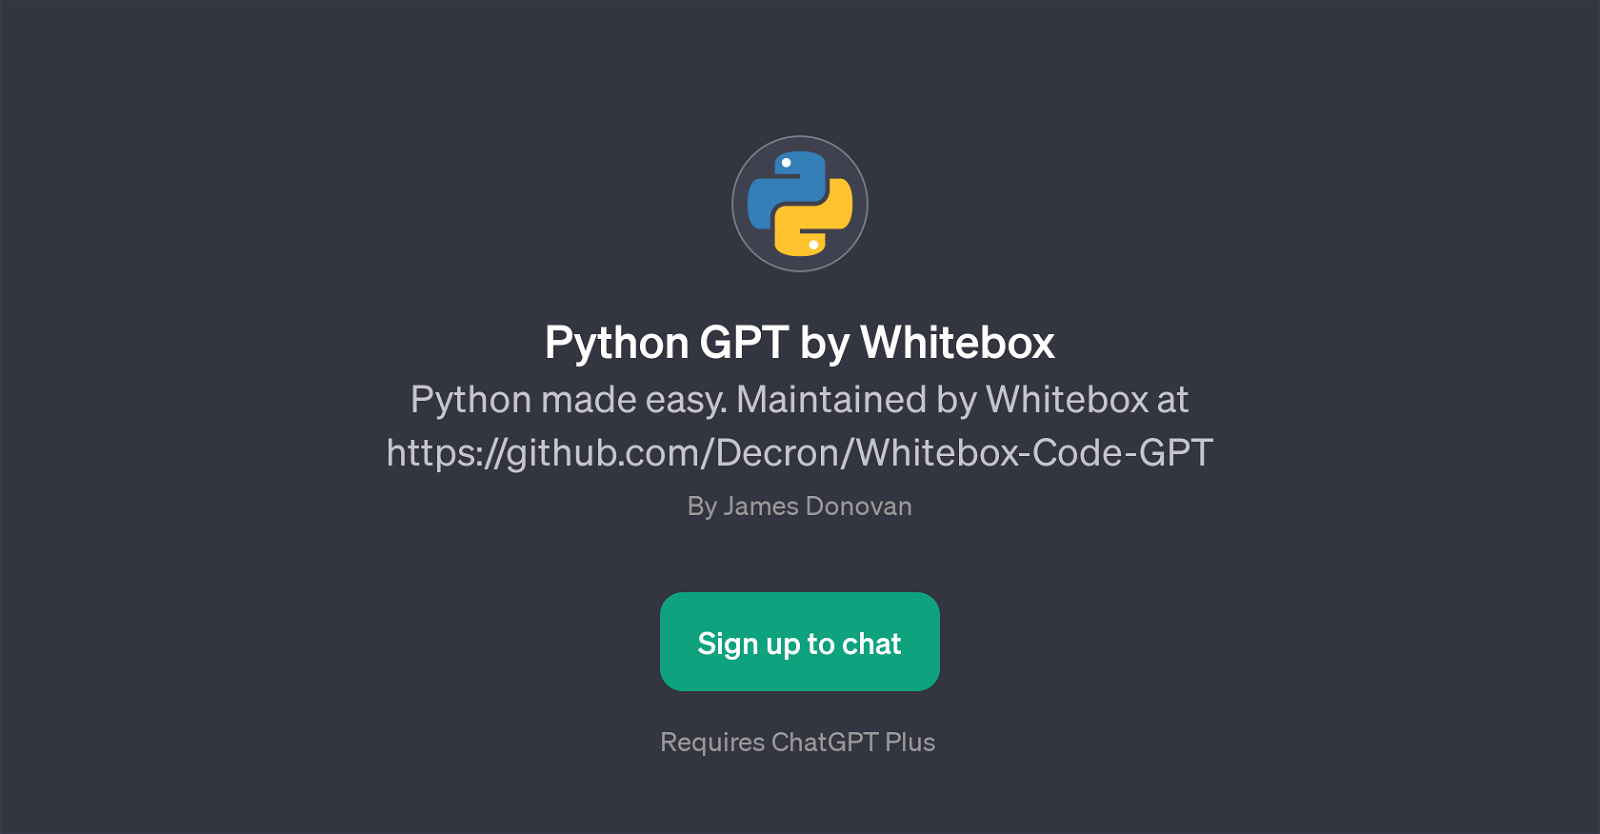 Python GPT by Whitebox website